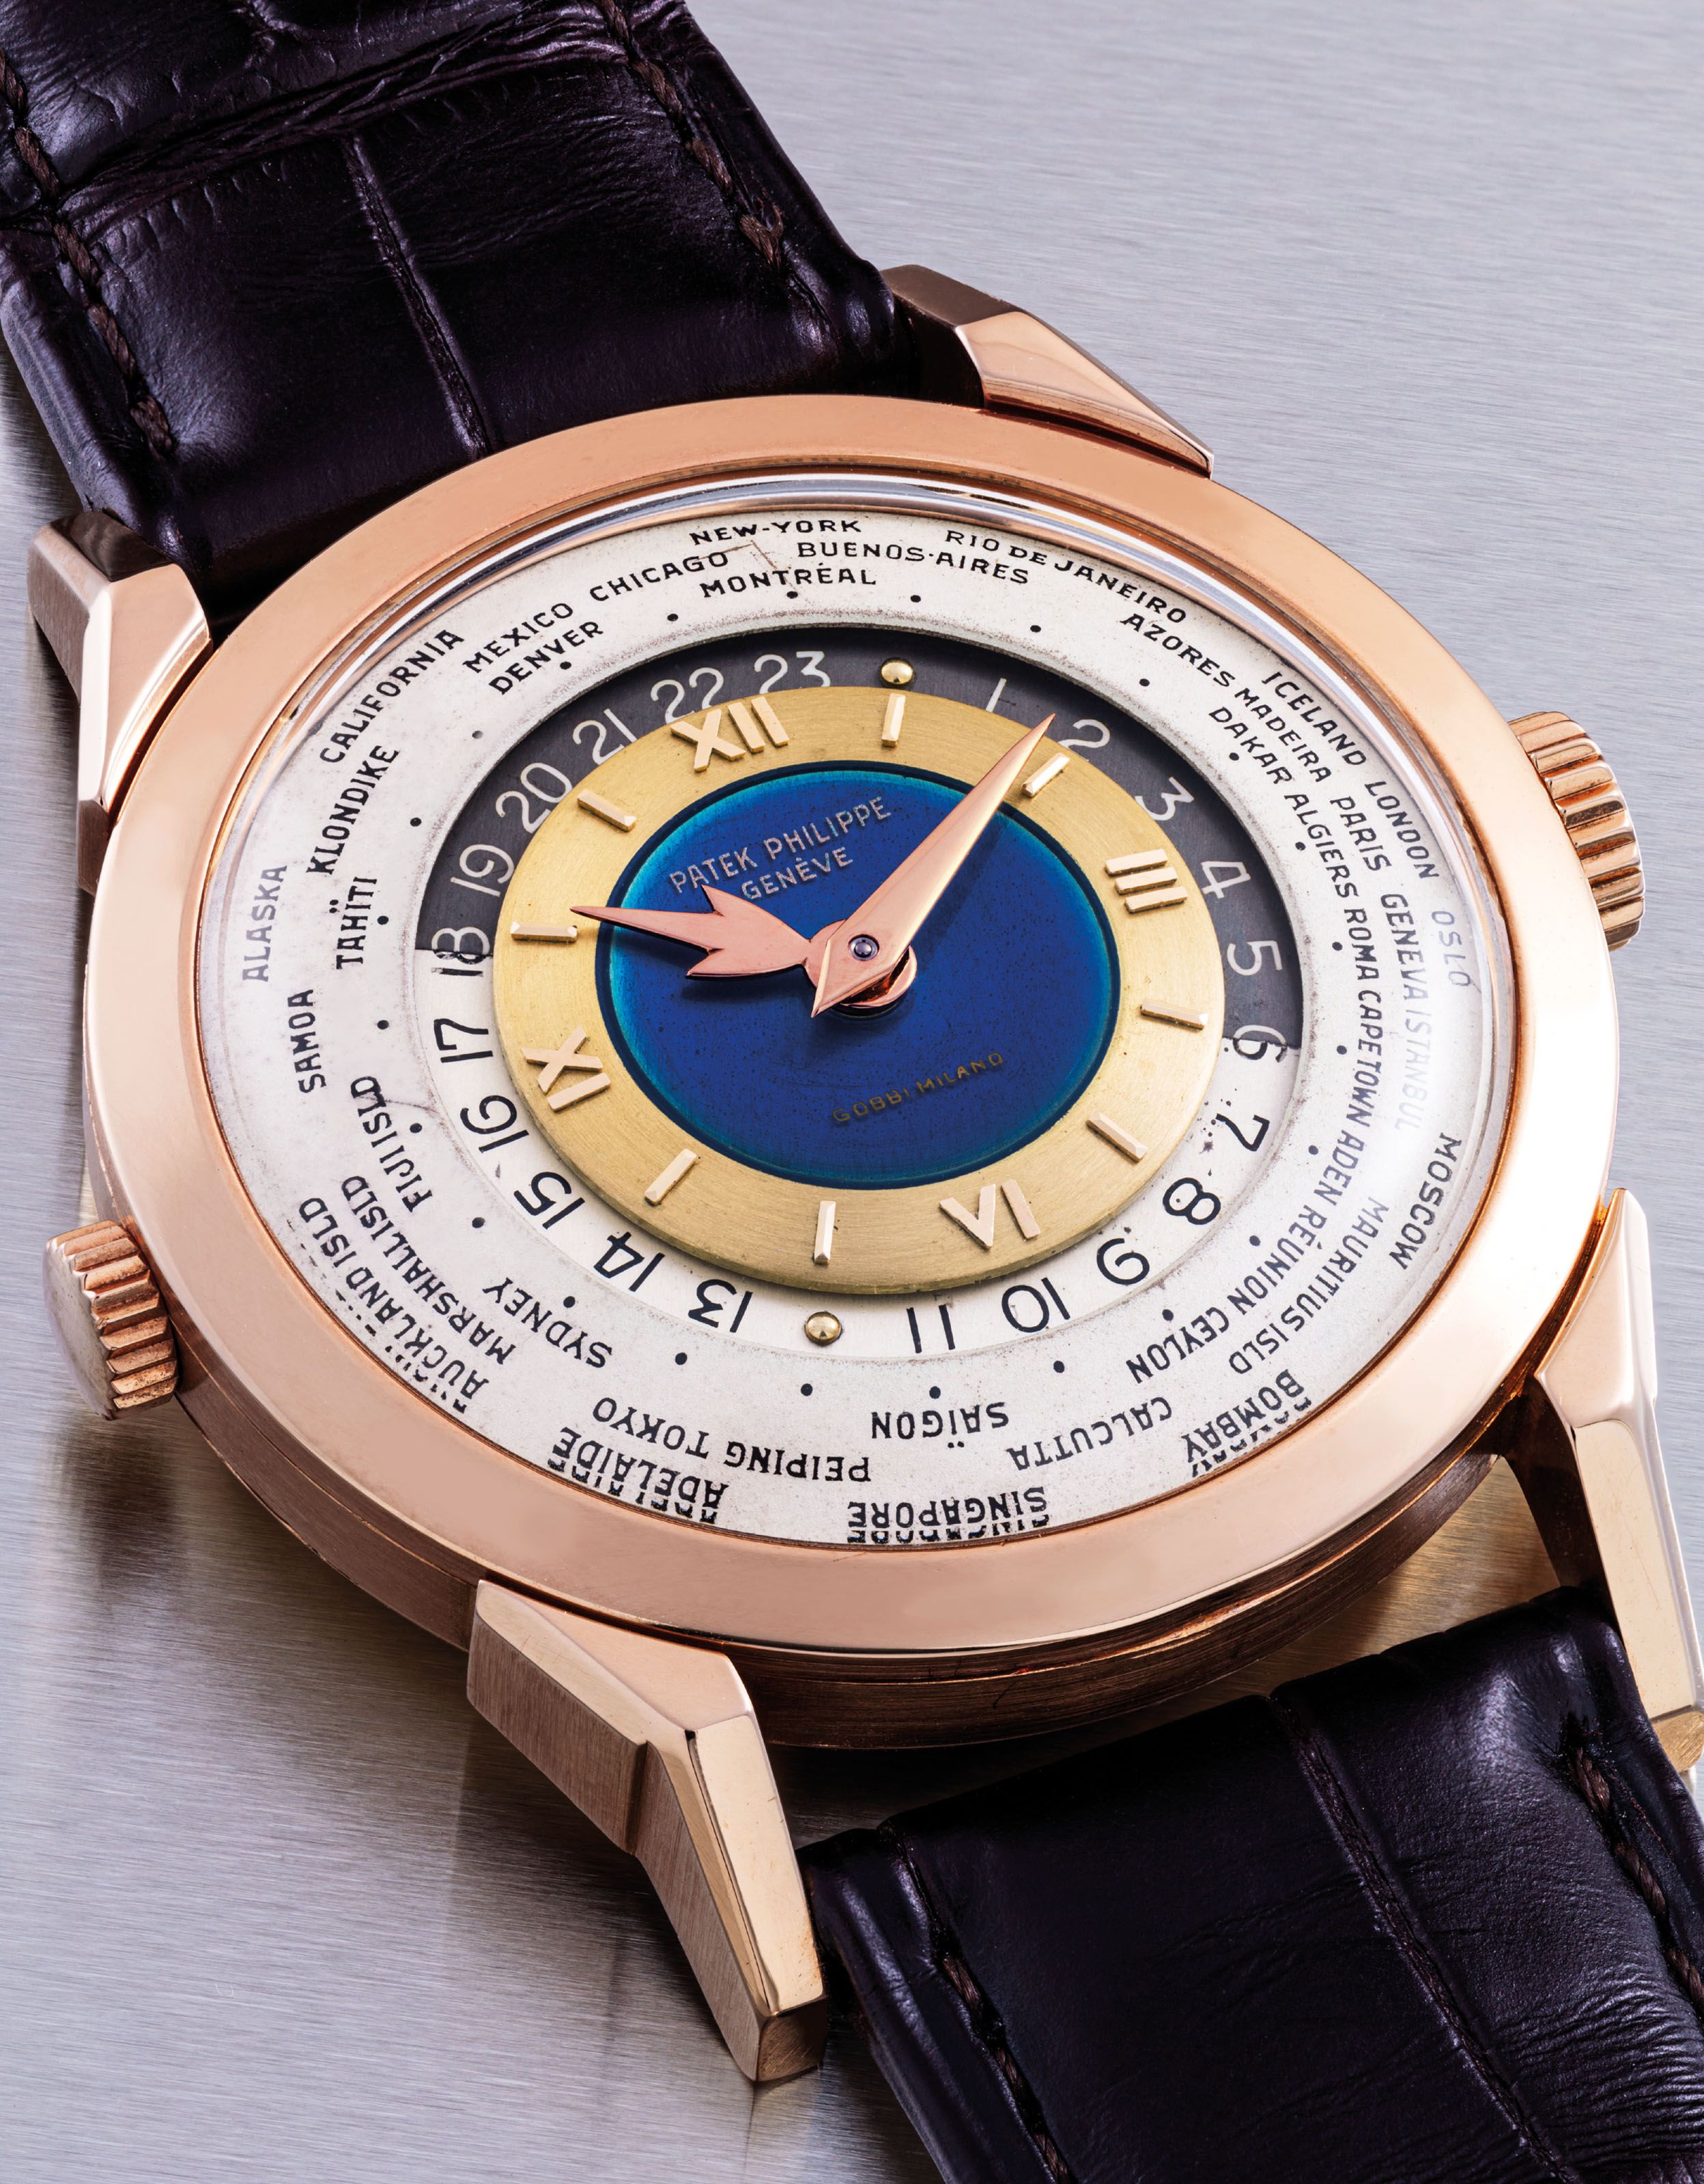 Market Makers: Top 25 Most Expensive Watch Brands in the World | Expensive  watches, Expensive watch brands, Watch brands